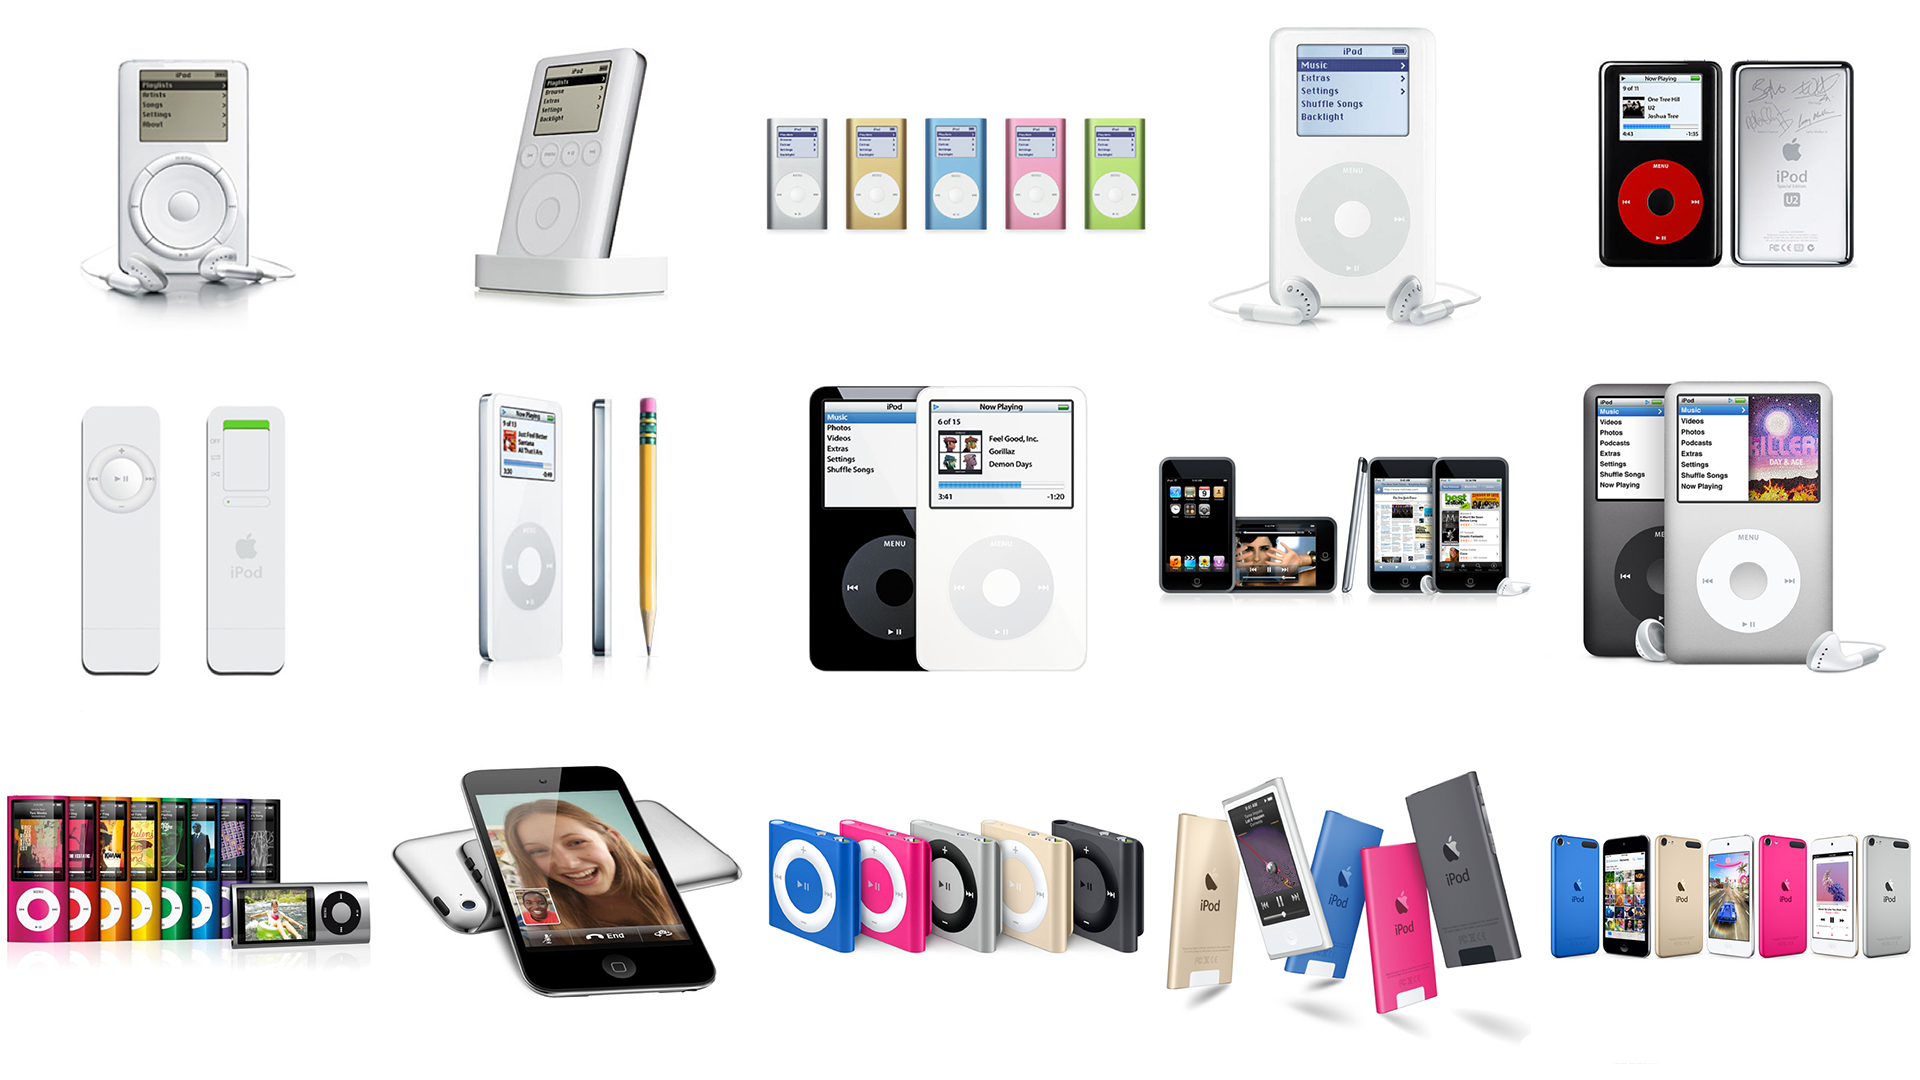 Berbagai versi Ipod selama bertahun-tahun